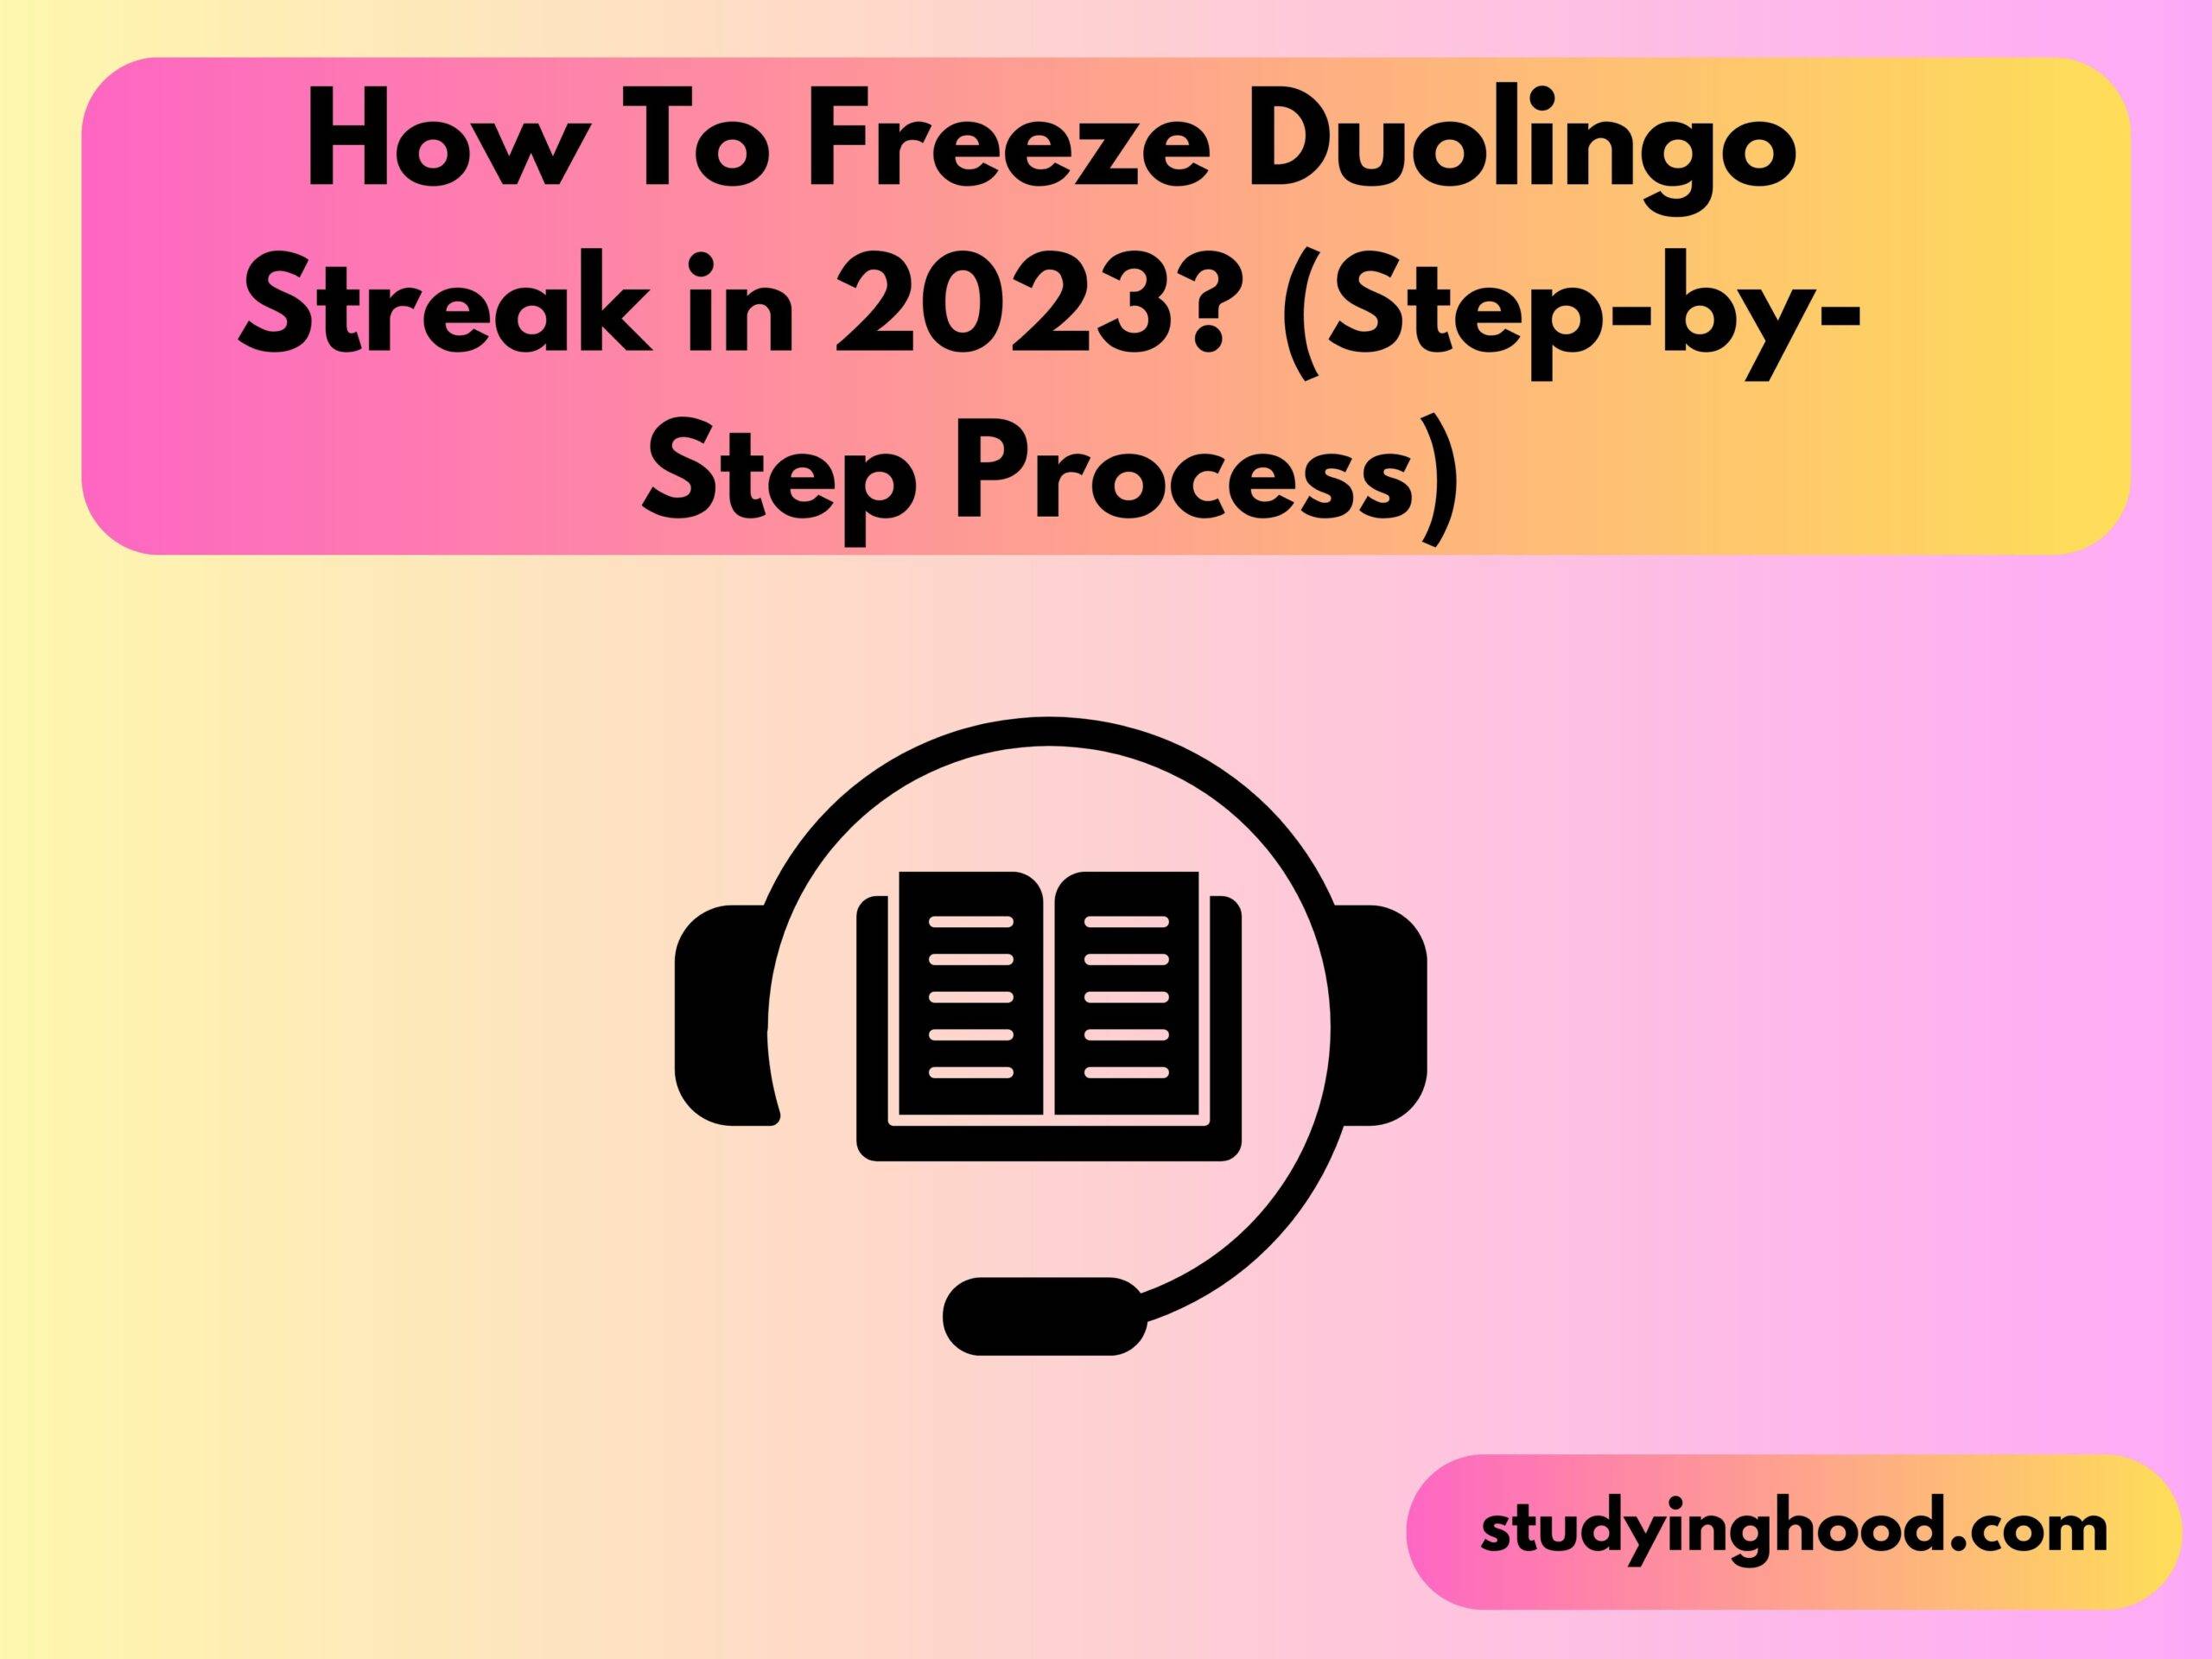 How To Freeze Duolingo Streak in 2023? (Step-by-Step Process)